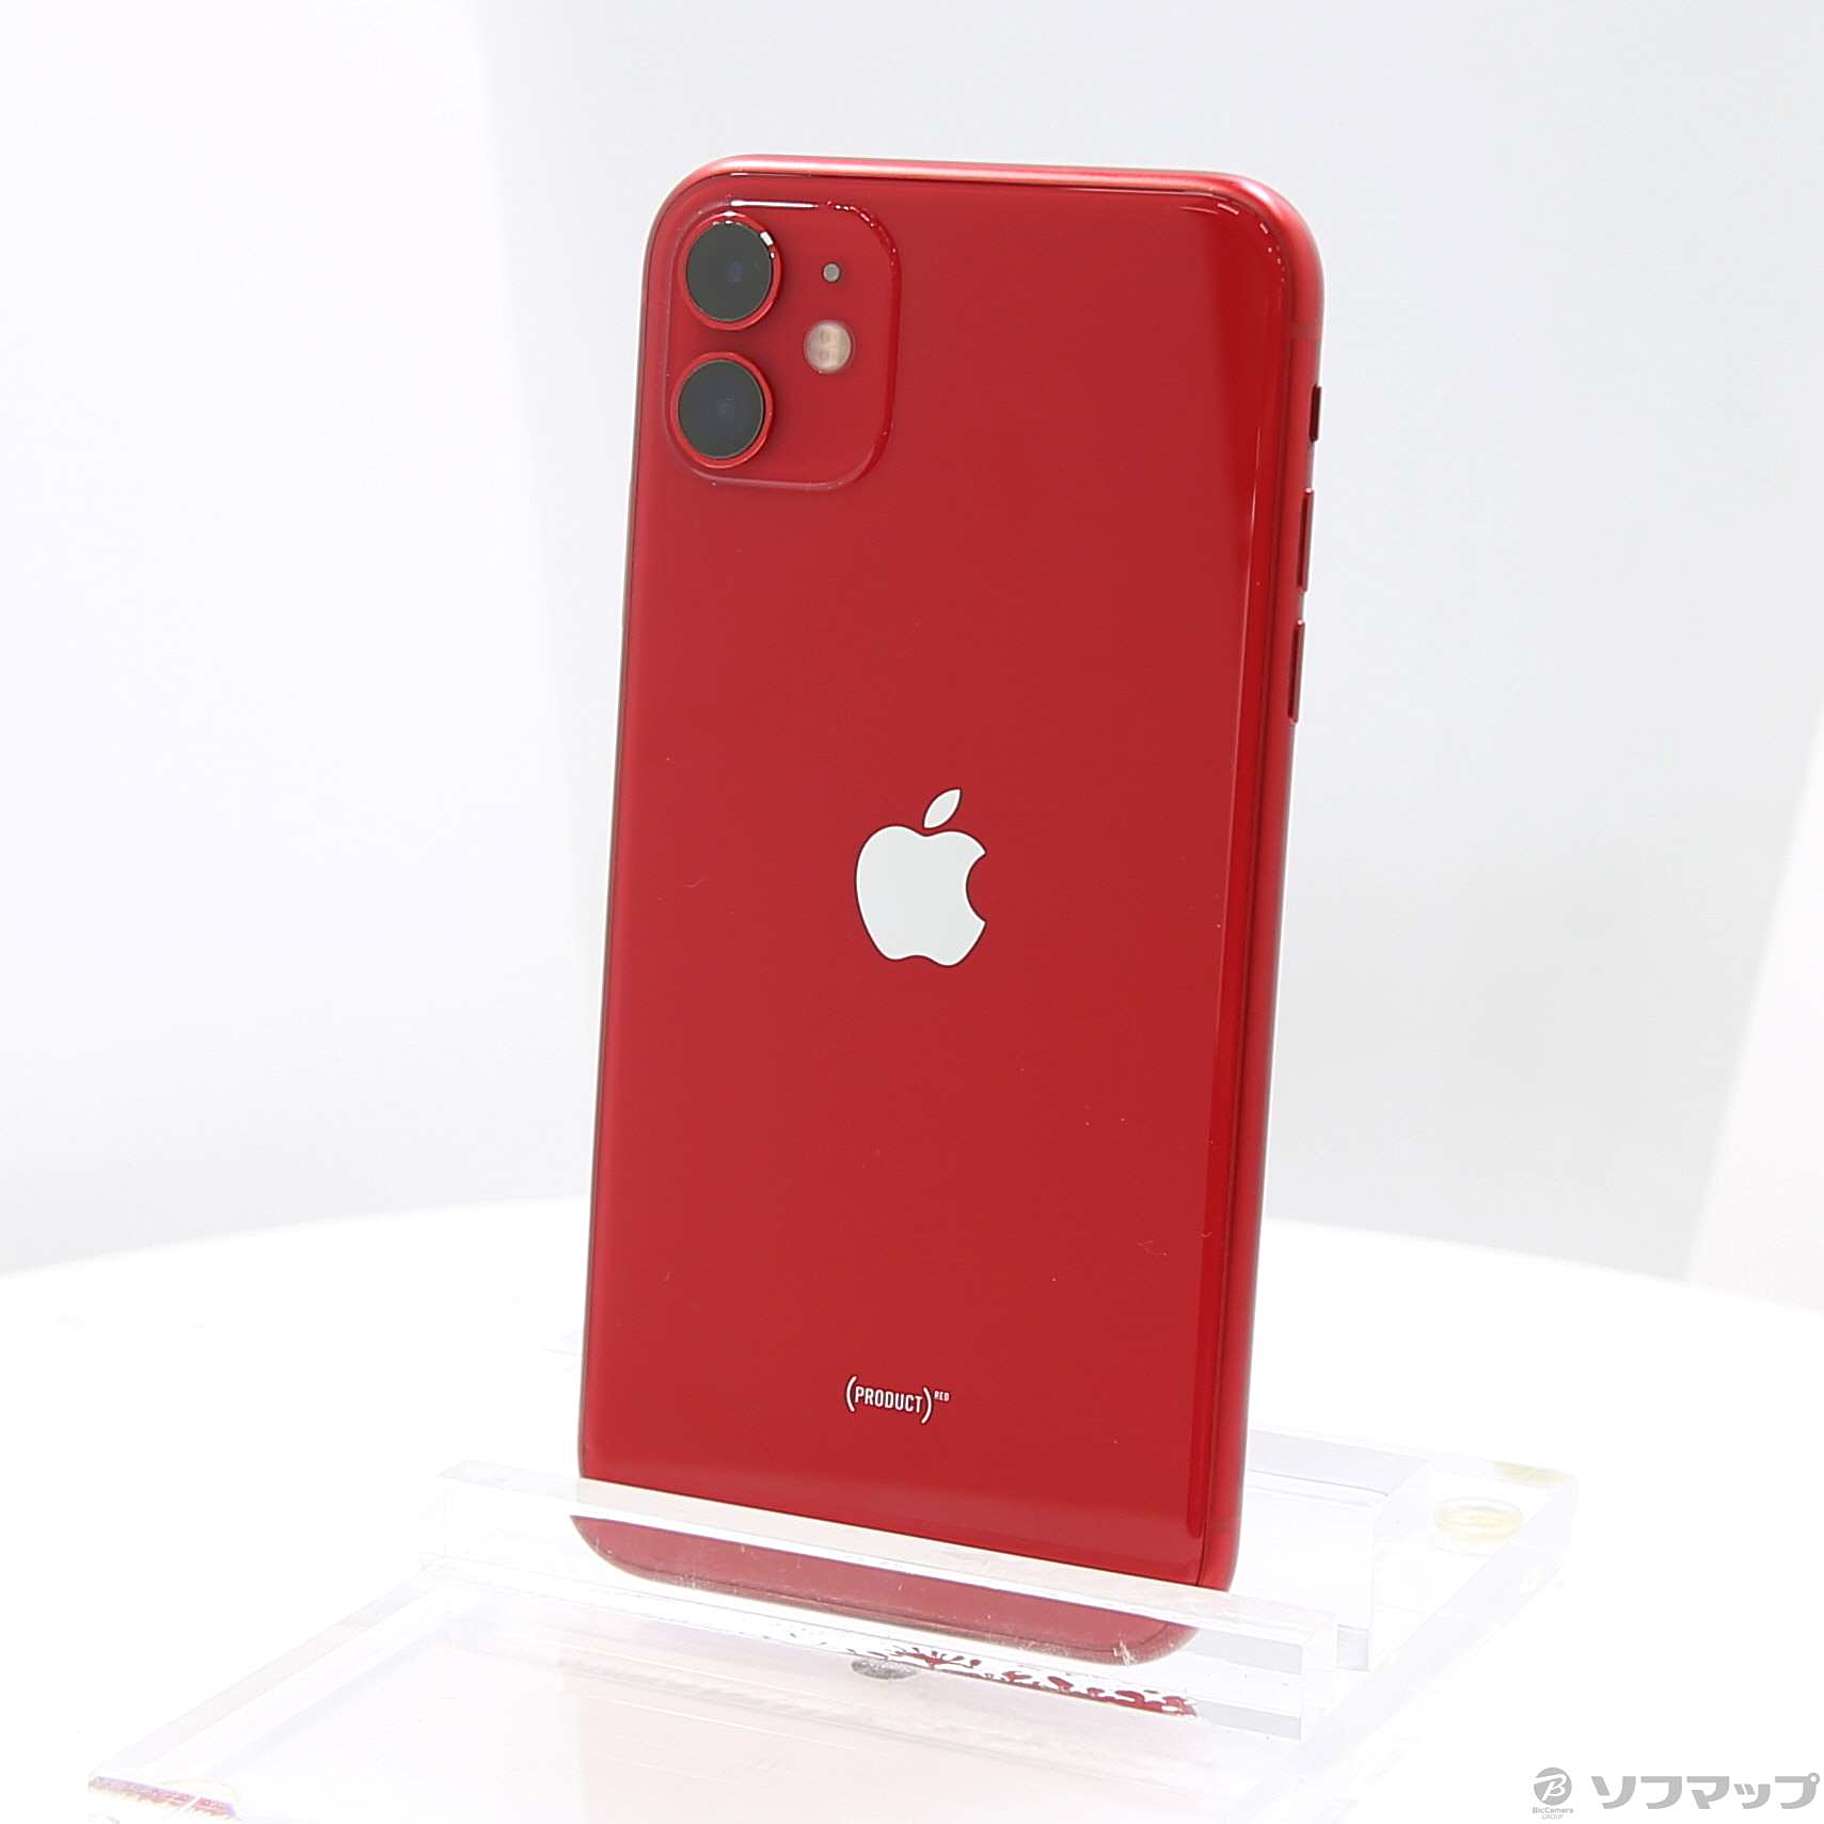 iPhone11 128GB (PRODUCT)RED SIMフリー - スマートフォン本体